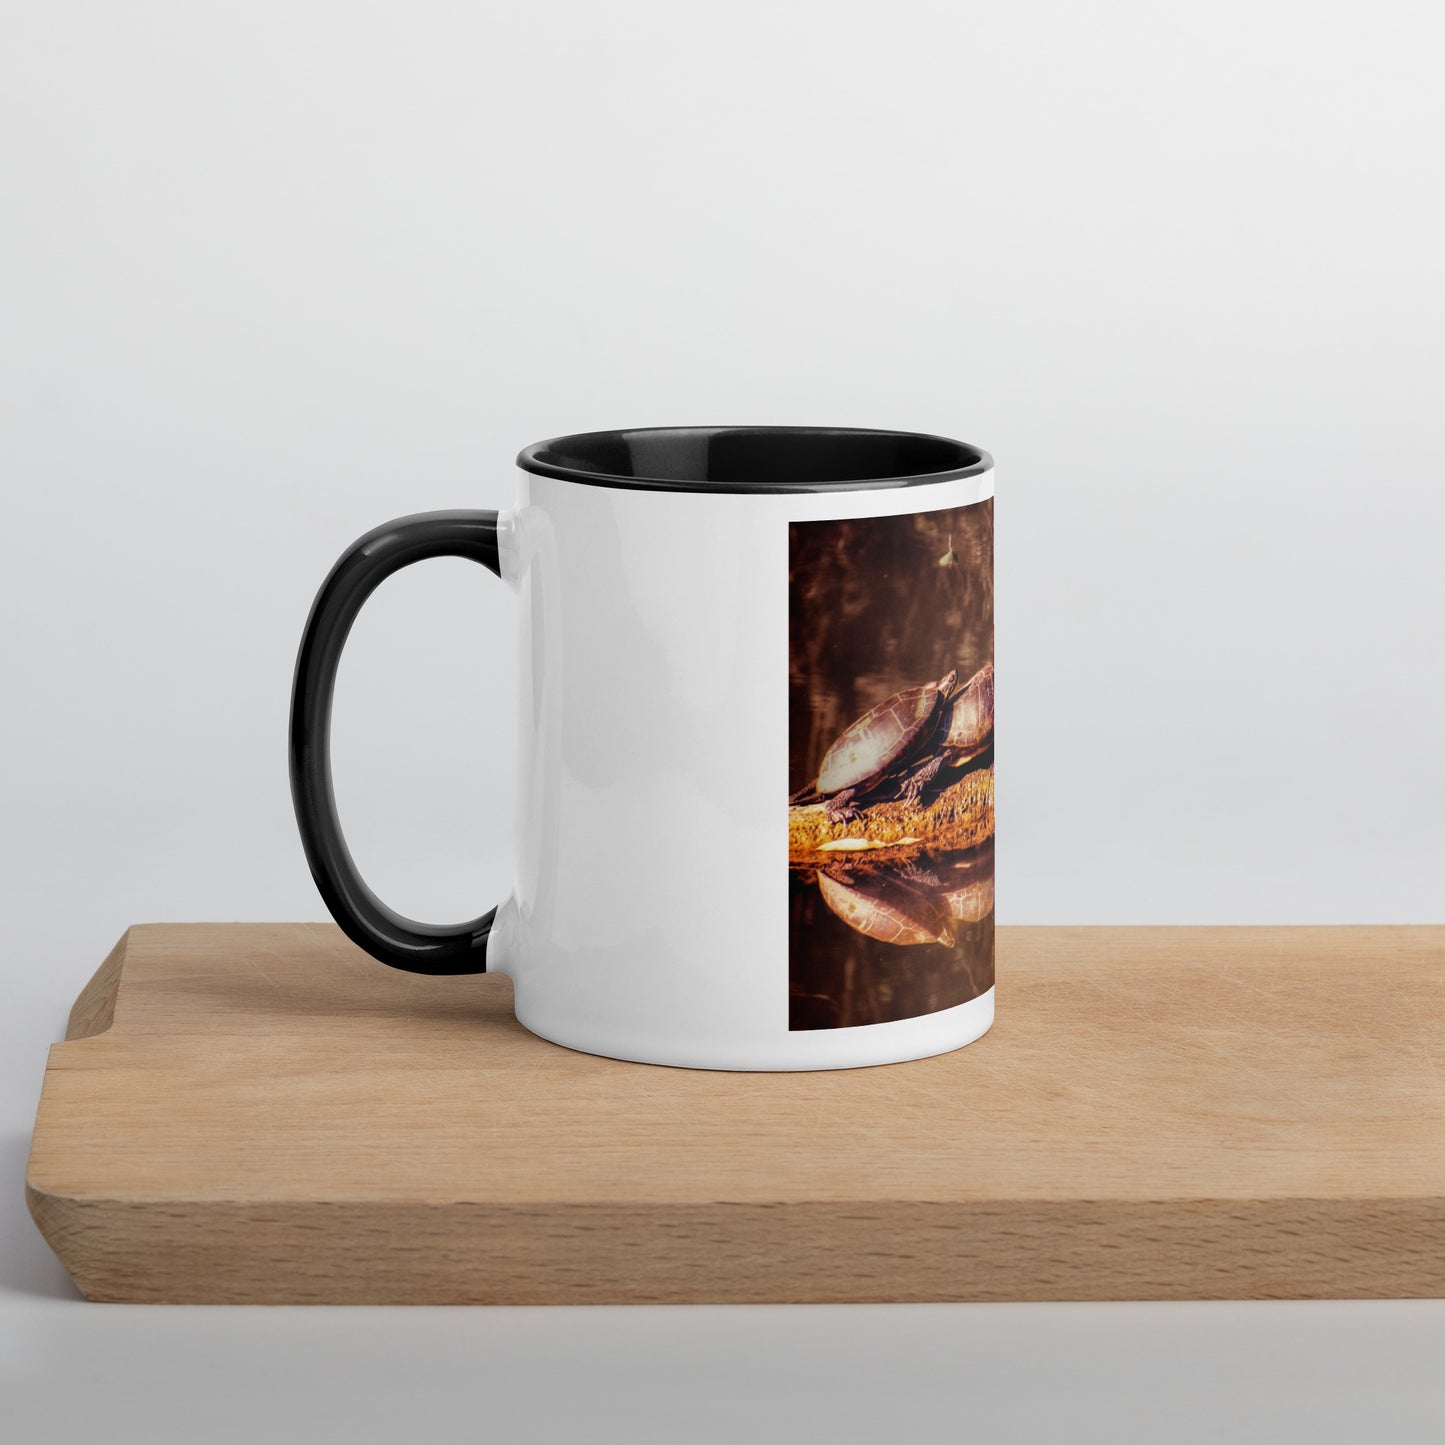 3 Turtle Coffee Mug Gift Idea